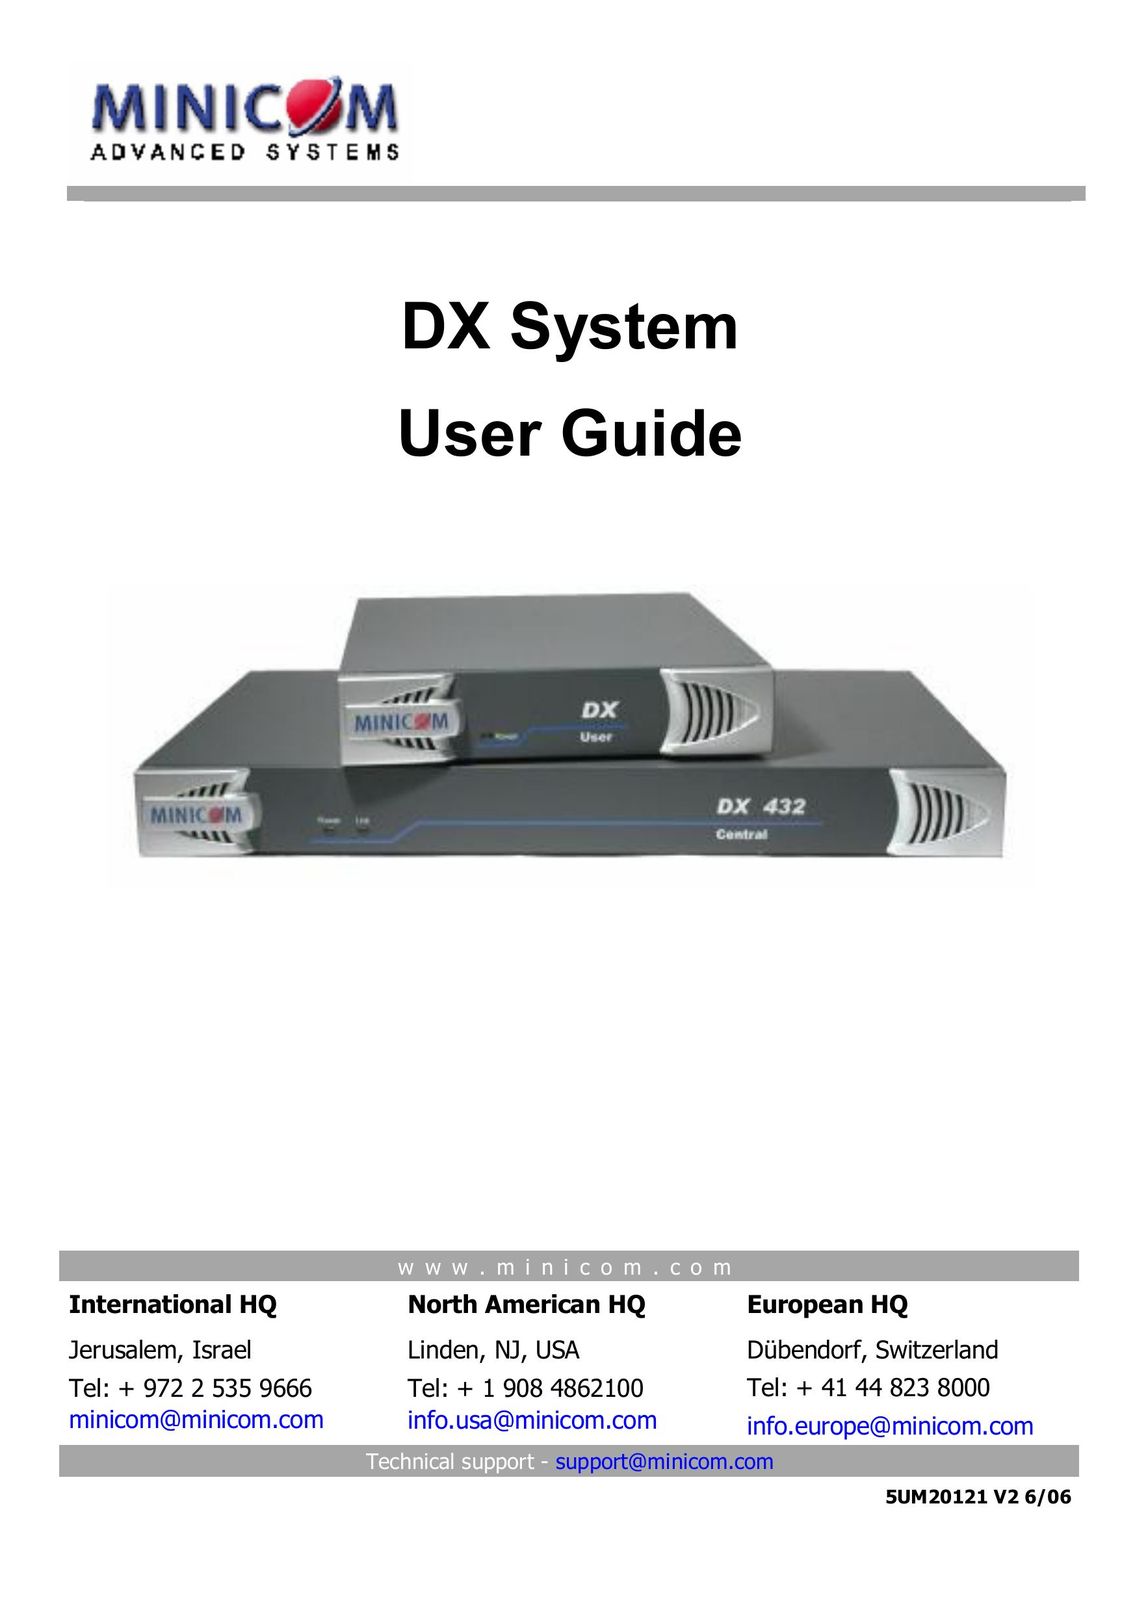 Minicom Advanced Systems DX System Switch User Manual